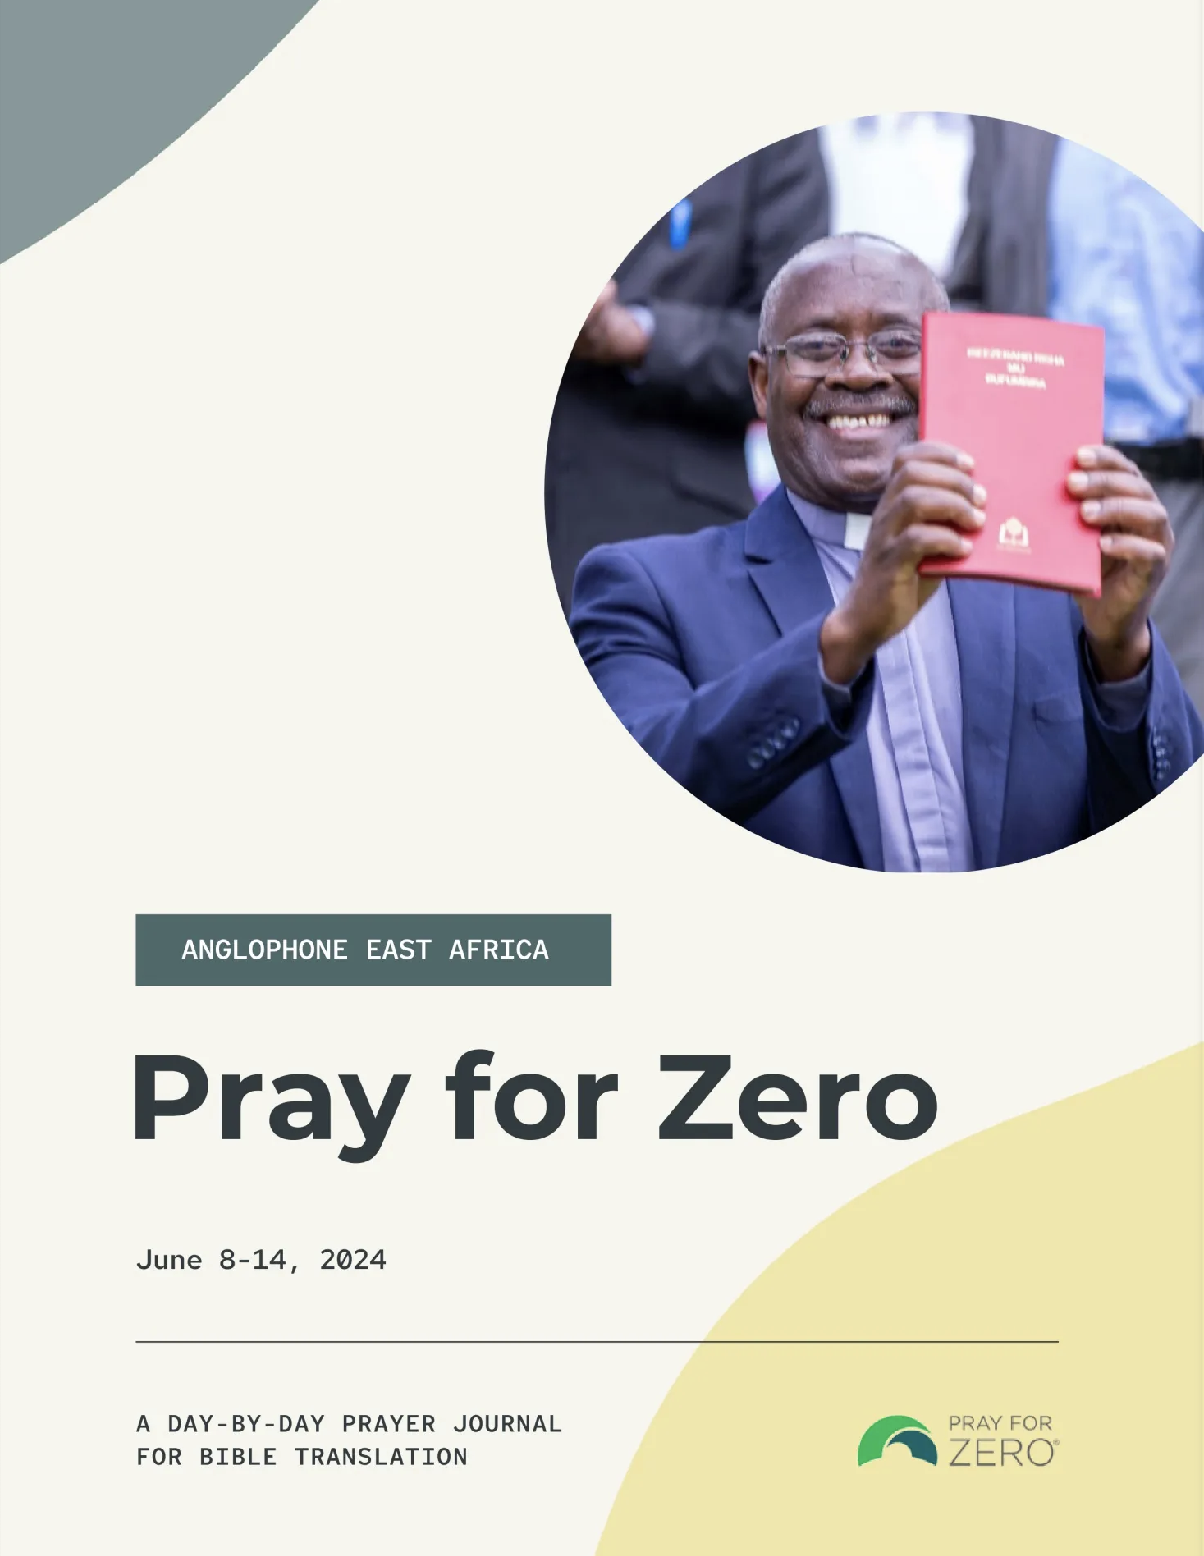 Anglophone East Africa prayer journal